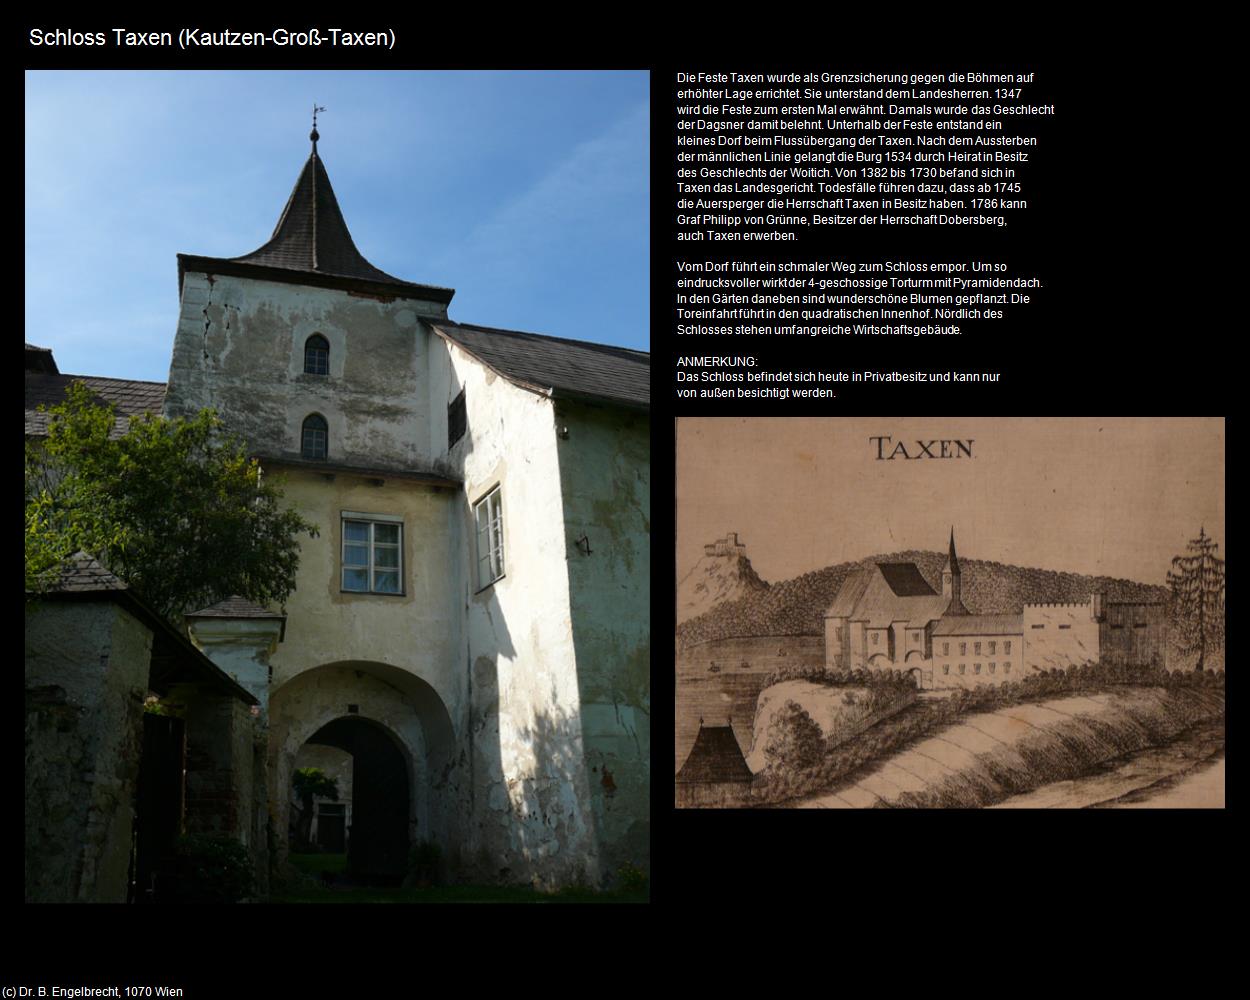 Schloss Taxen (Groß-Taxen) (Kautzen) in Kulturatlas-NIEDERÖSTERREICH